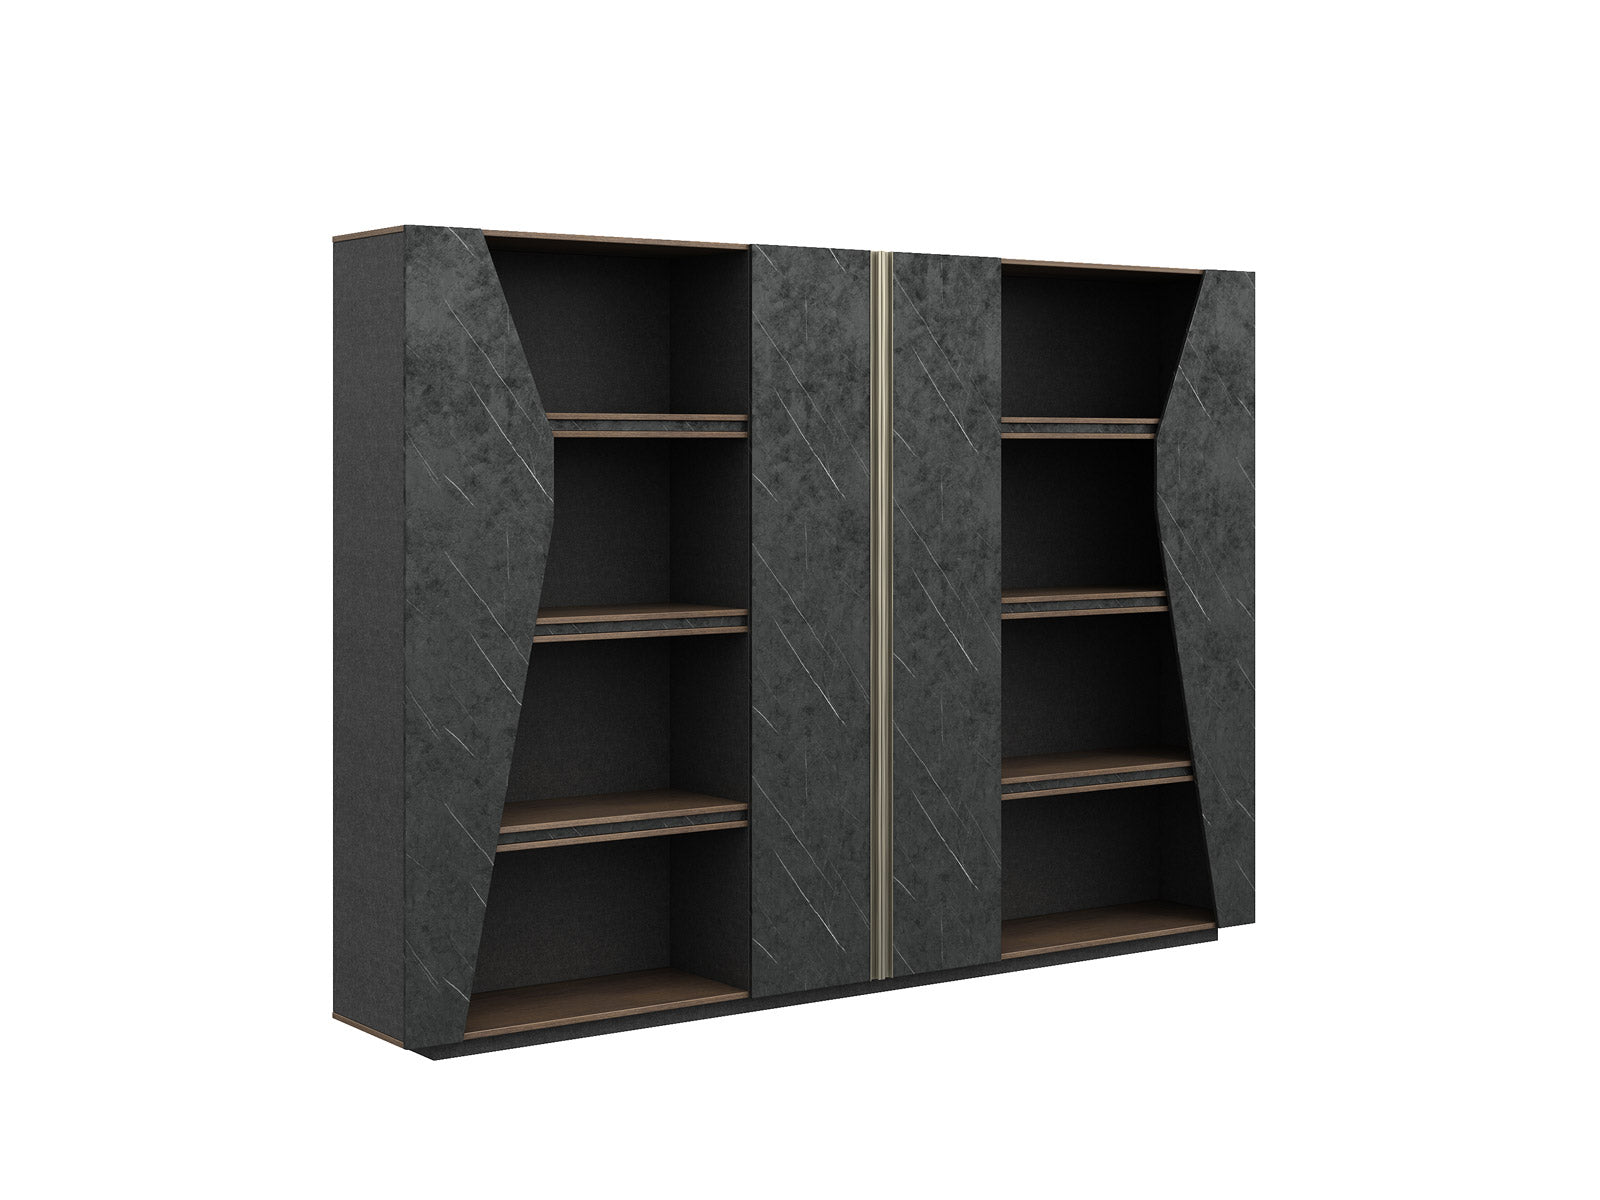 DreasyTech ALTON 2.8M Bookcase Display Filing 
                                                        Bookshelf Cabinet Shelf Unit